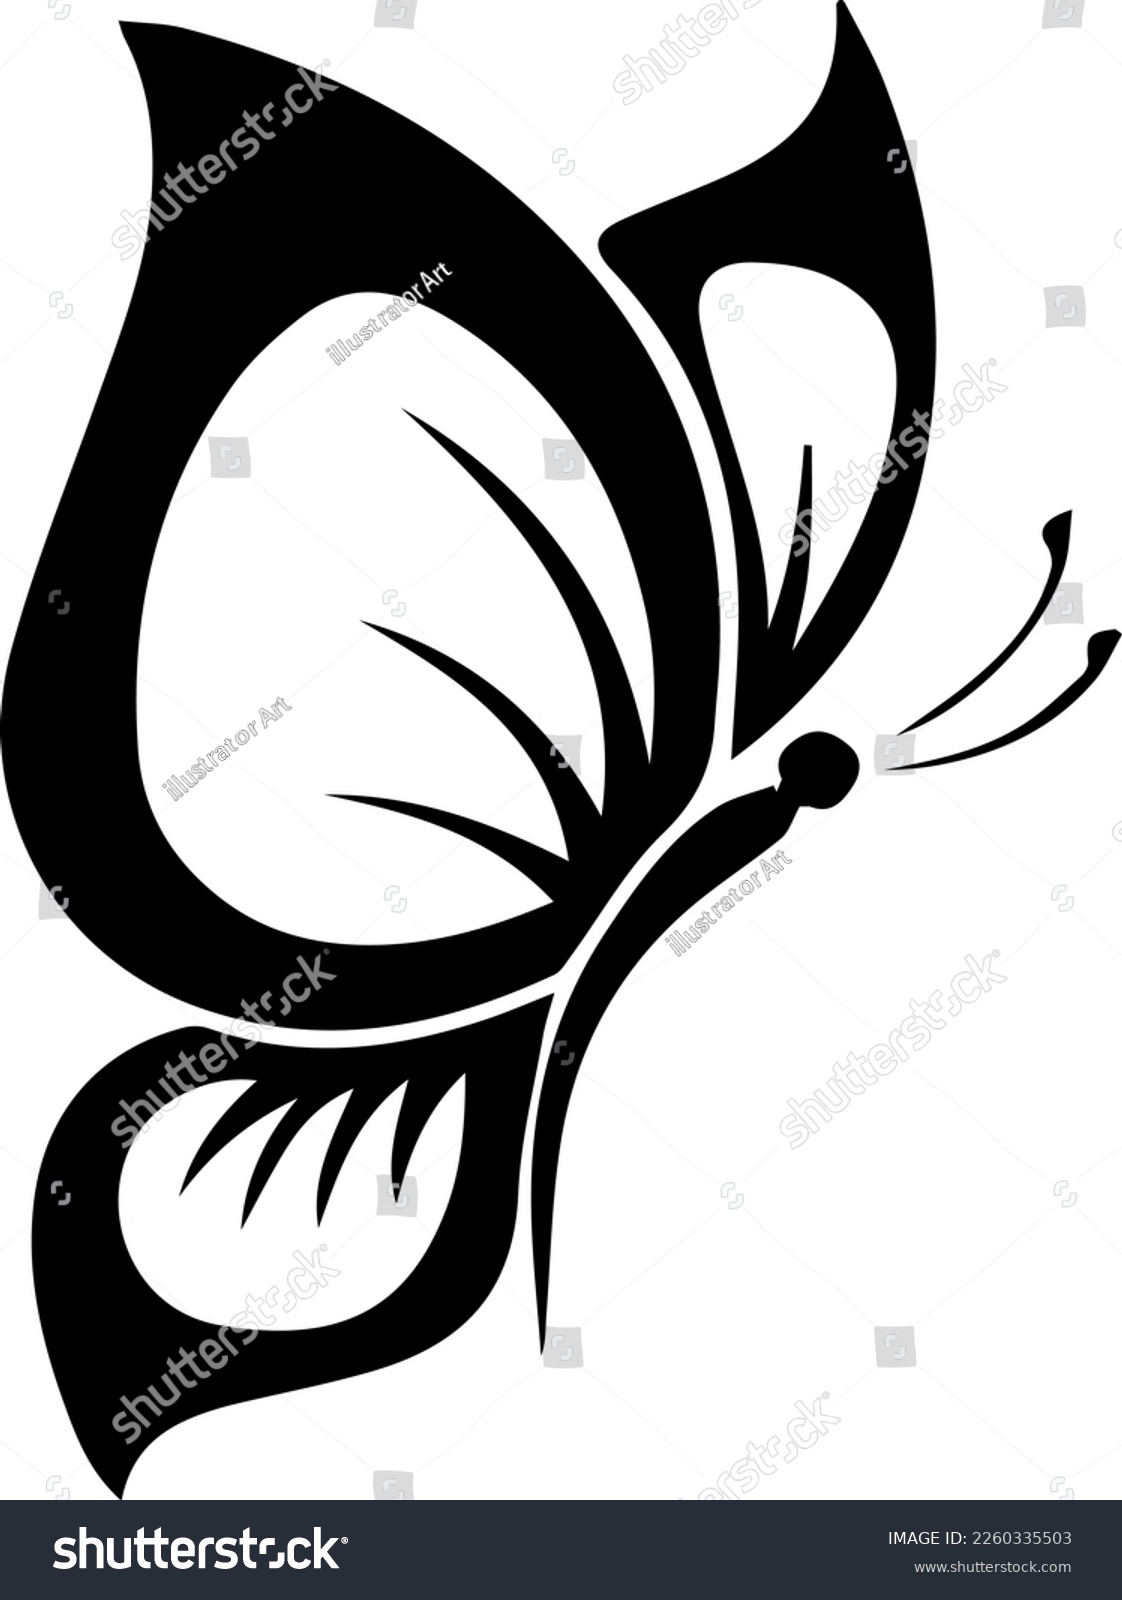 SVG of Butterfly svg, butterfly logo, vector in black svg